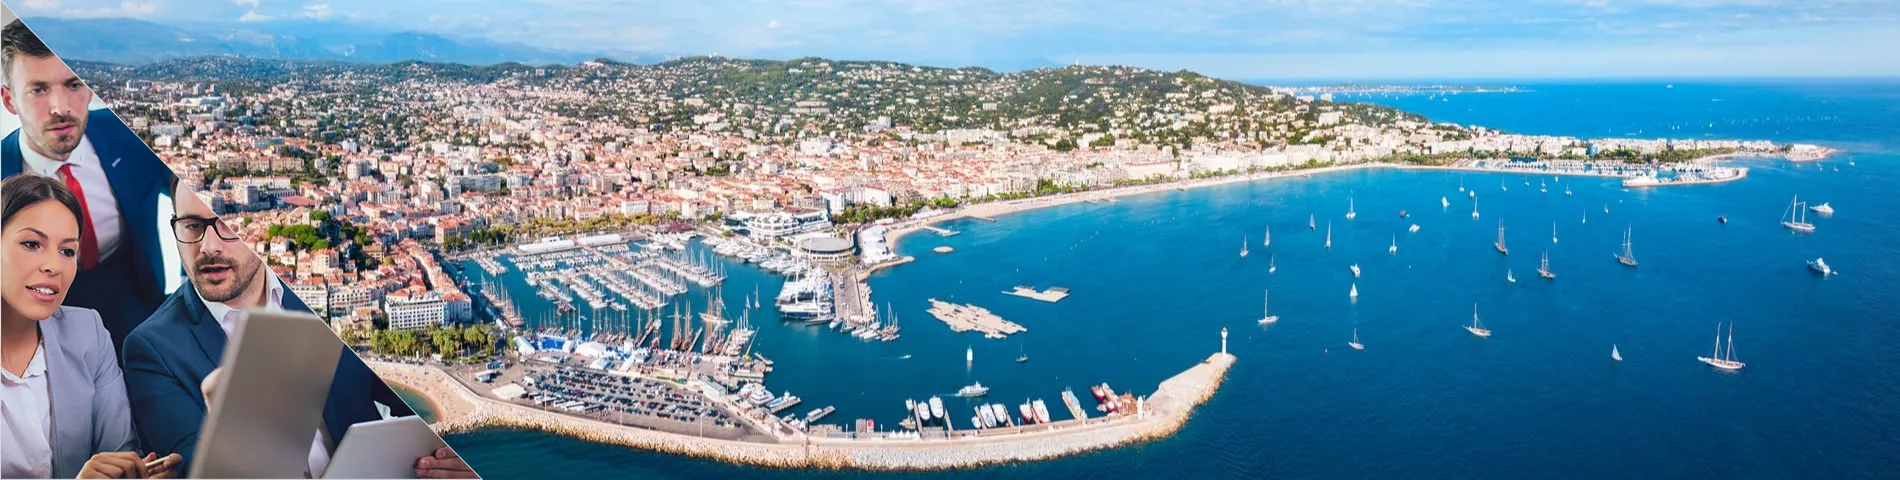 Cannes - Štandard a biznis - kombinovaná skupina